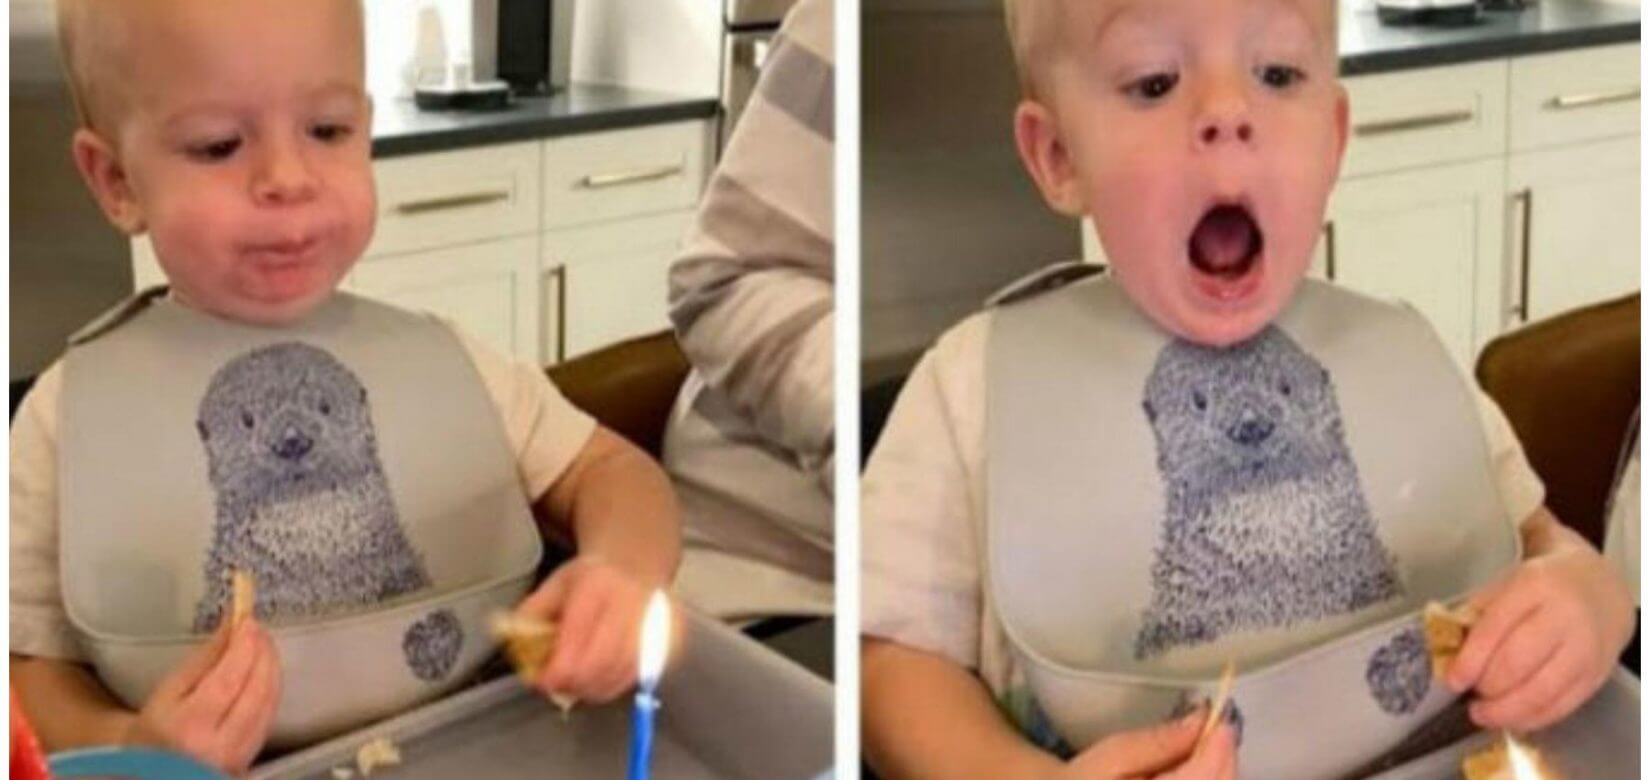 Viral : To βίντεο ενός μικρού αγοριού που προσπαθεί να σβήσει το κεράκι γενεθλίων του θα σας φτιάξει τη διάθεση!